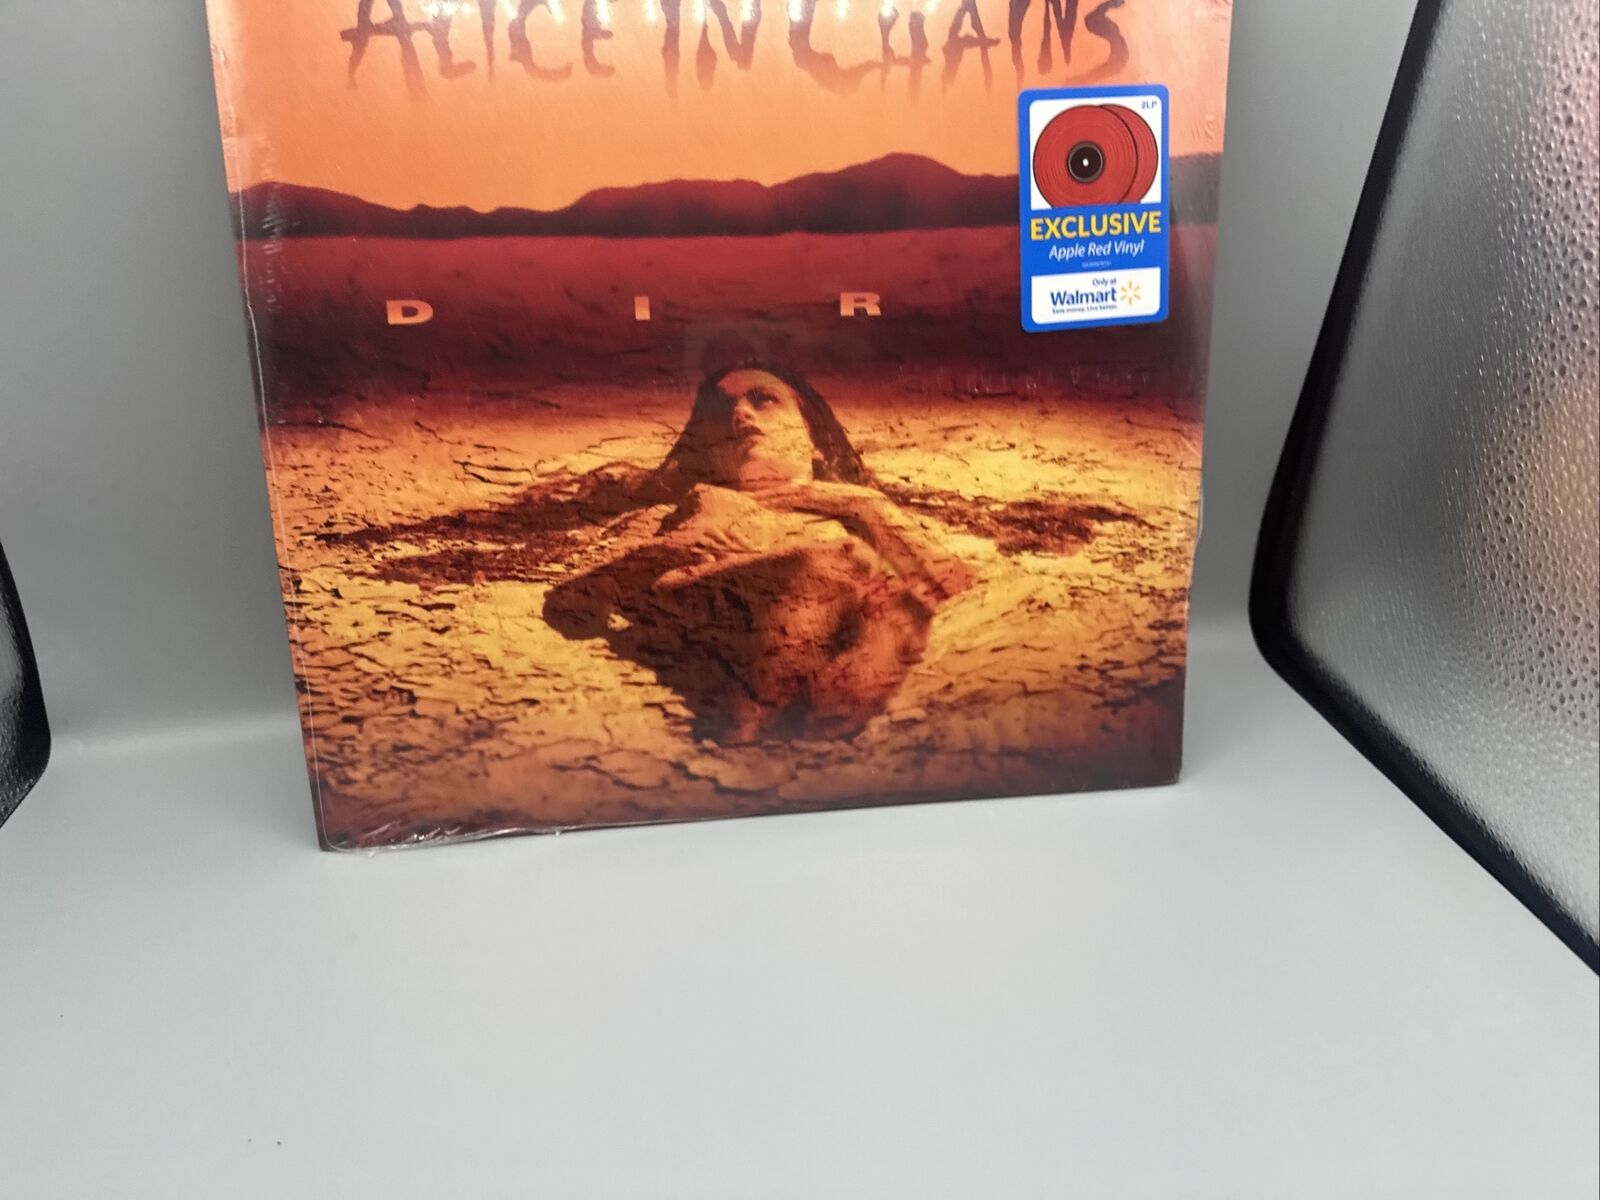 Alice In Chains - Dirt (Walmart Exclusive Red Vinyl)